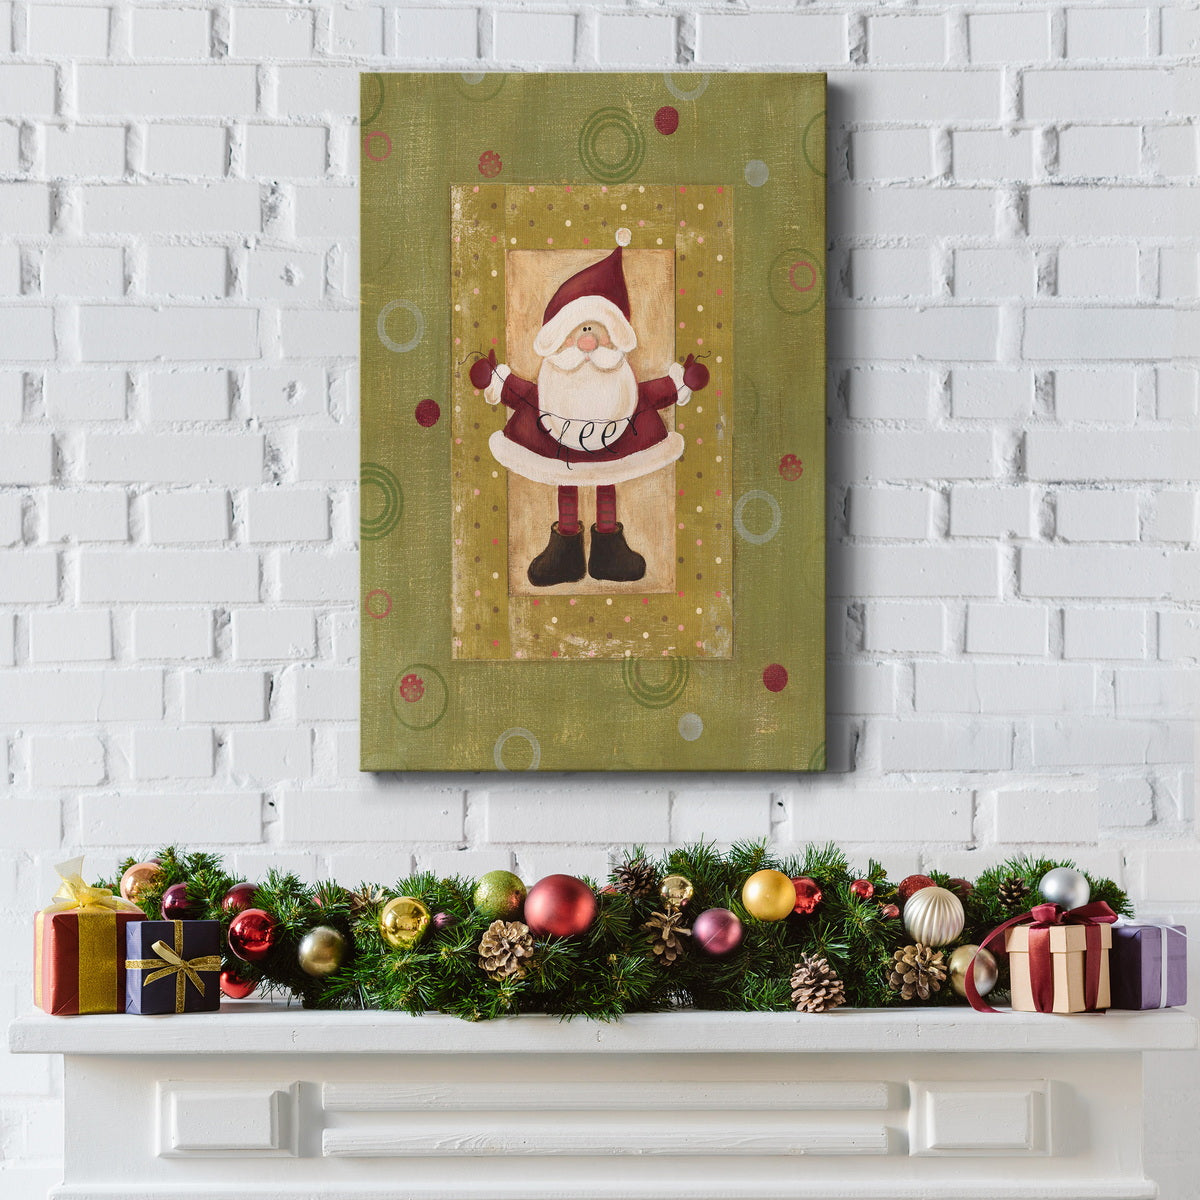 ot Cheer Santa Premium Gallery Wrapped Canvas - Ready to Hang